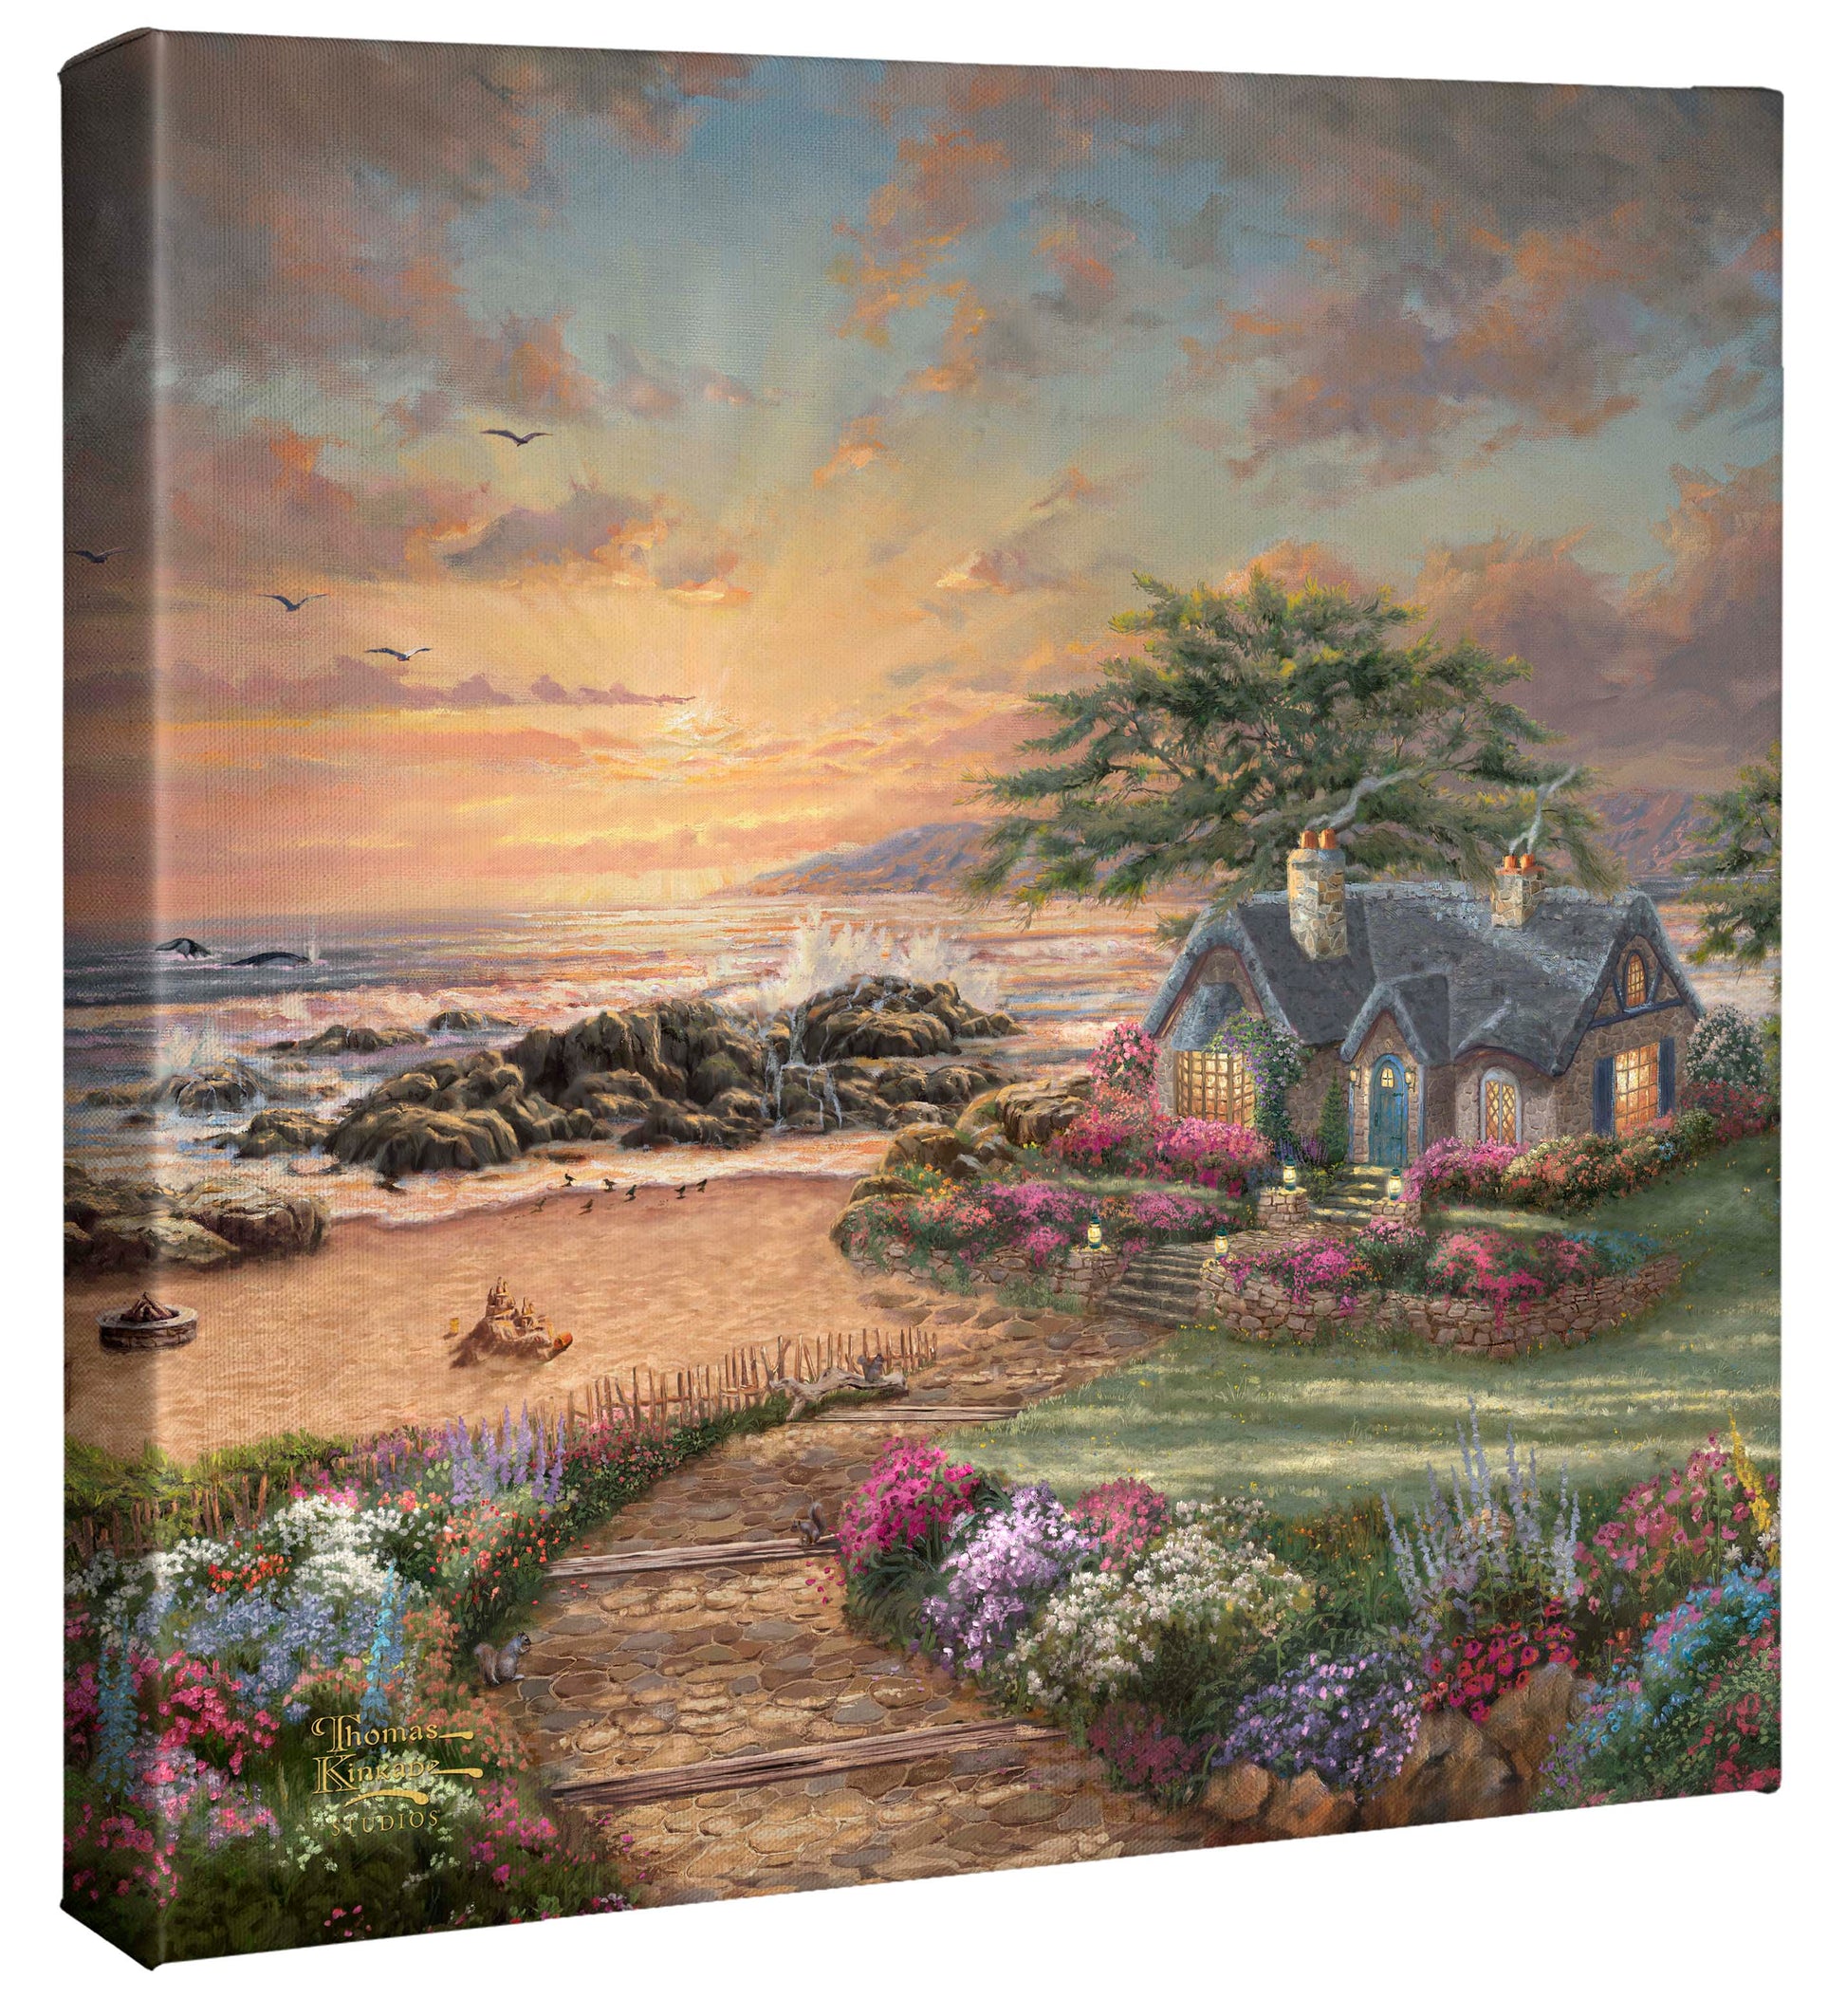 161986_CGW Seaside Cottage 14X14 Gallery Wrap Canvas_Mocked.jpg